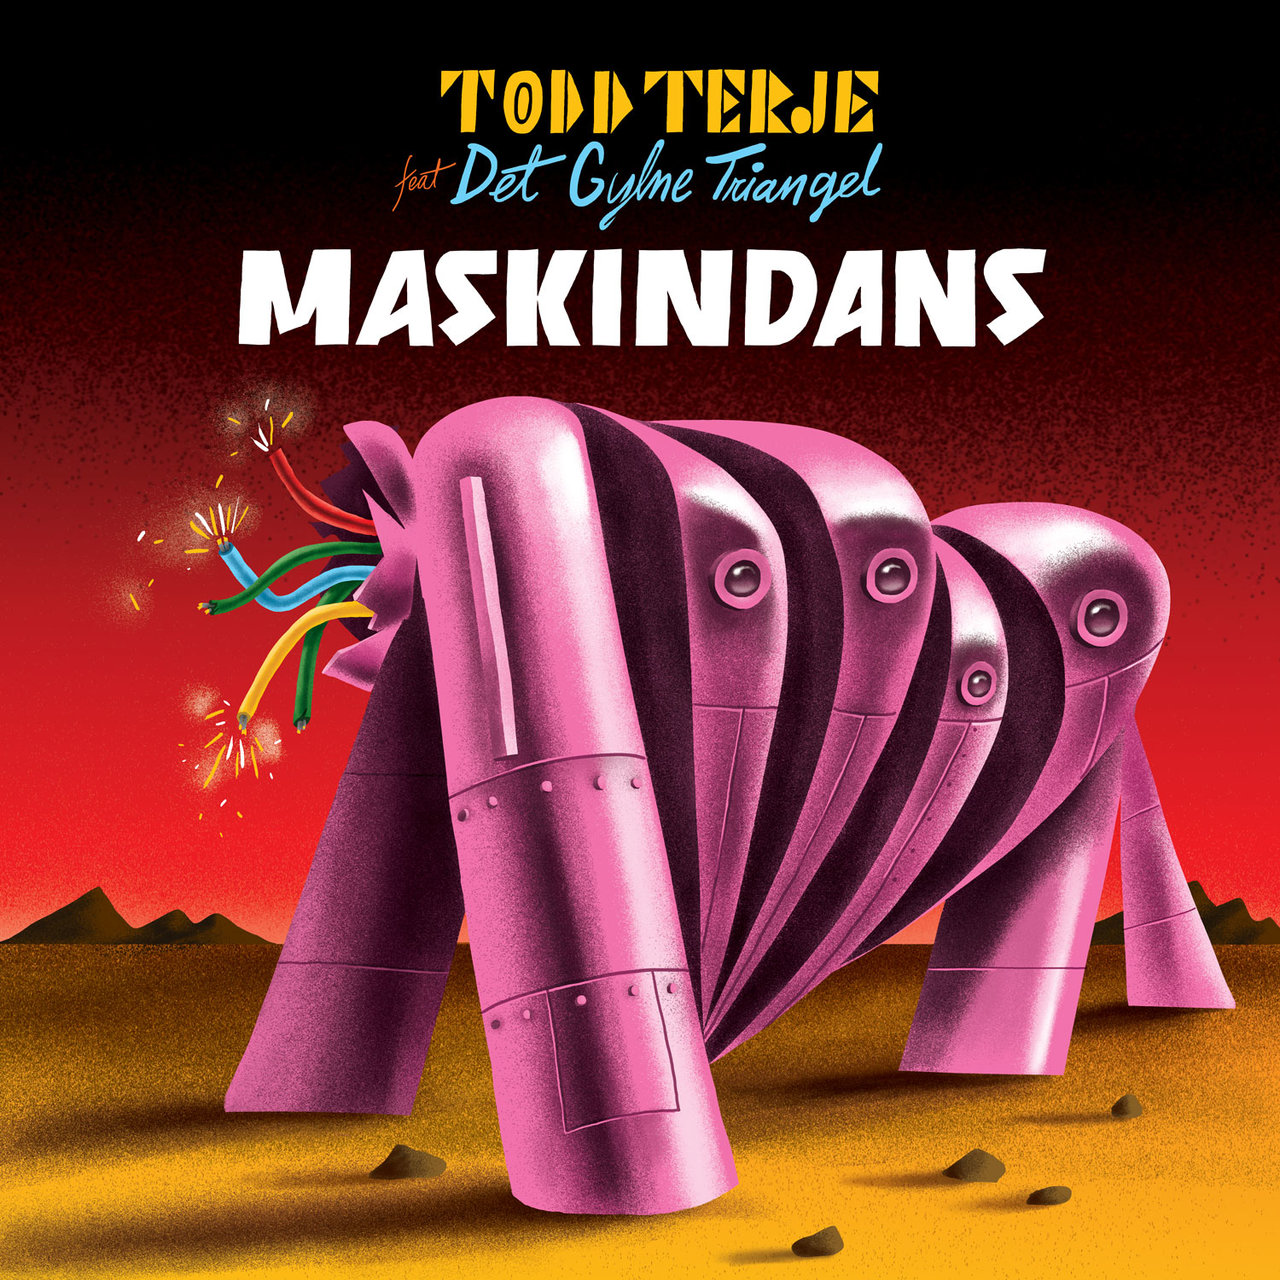 Todd Terje - Maskindans / Olsen Records